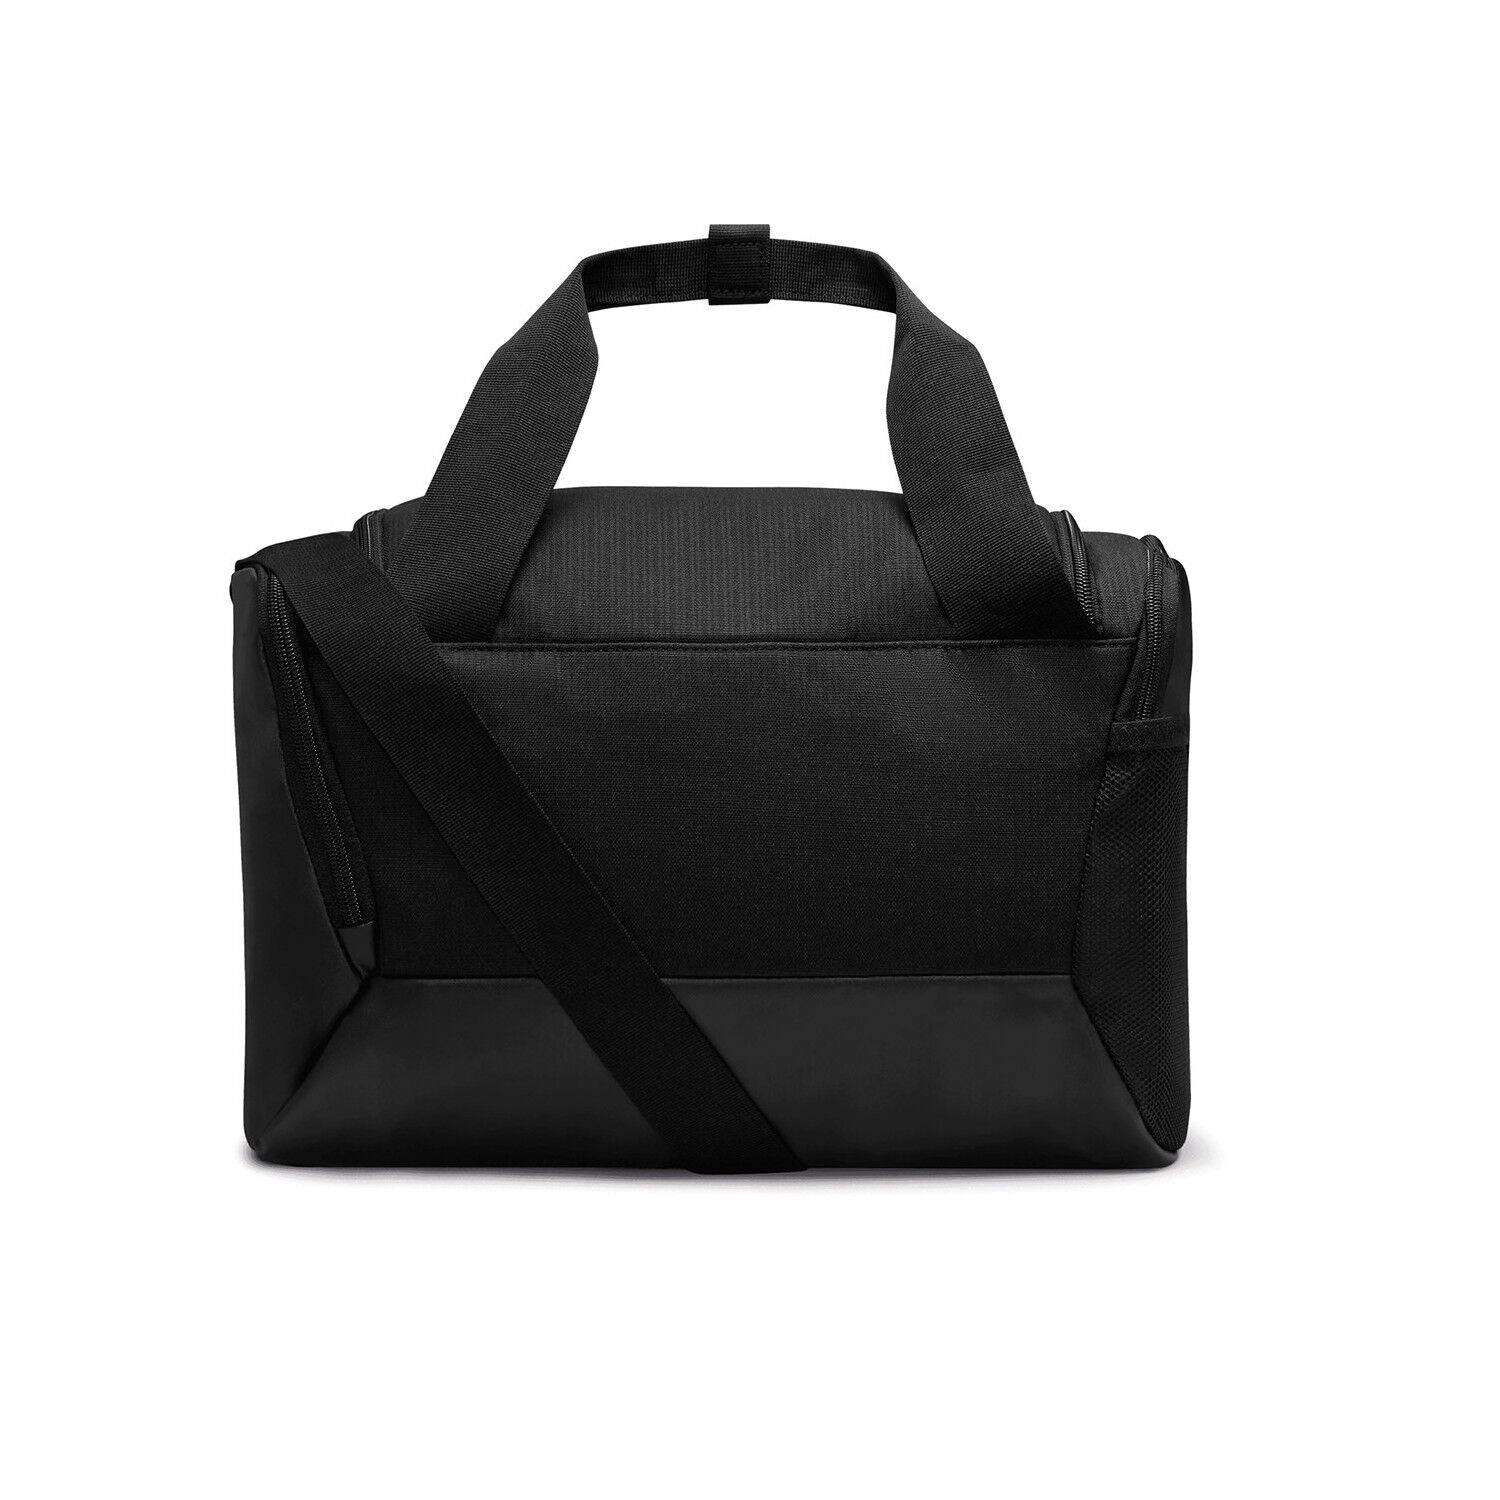 Nike Brasilia X-Small Duffle Bag 25L